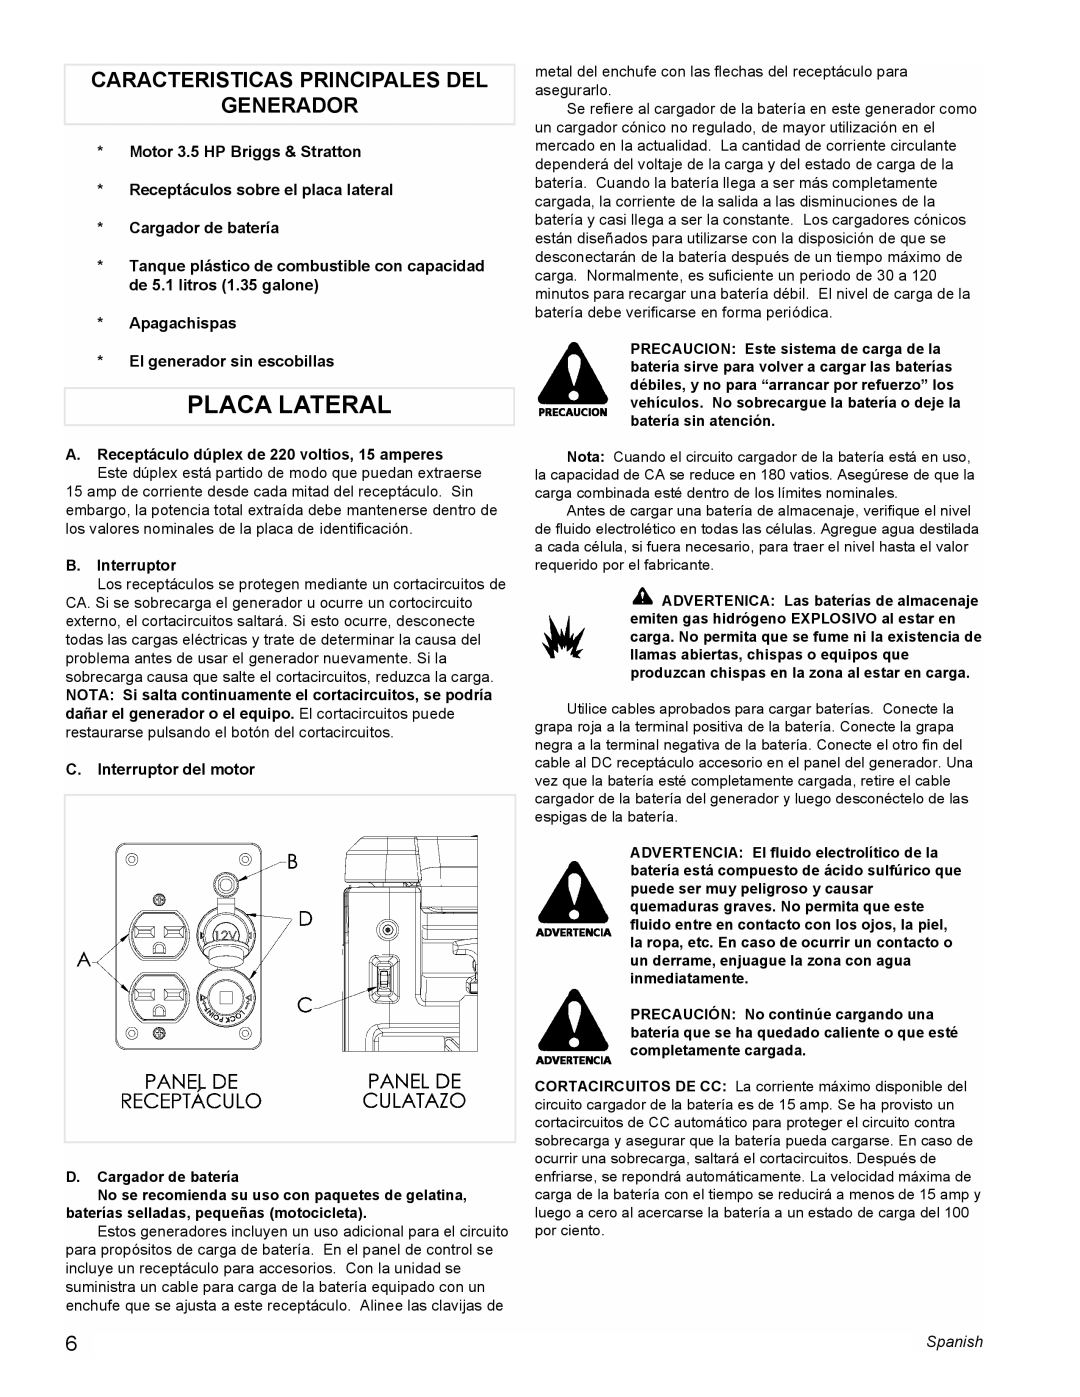 Powermate PE0401853 manual Placa Lateral, Caracteristicas Principales Del Generador, Spanish 